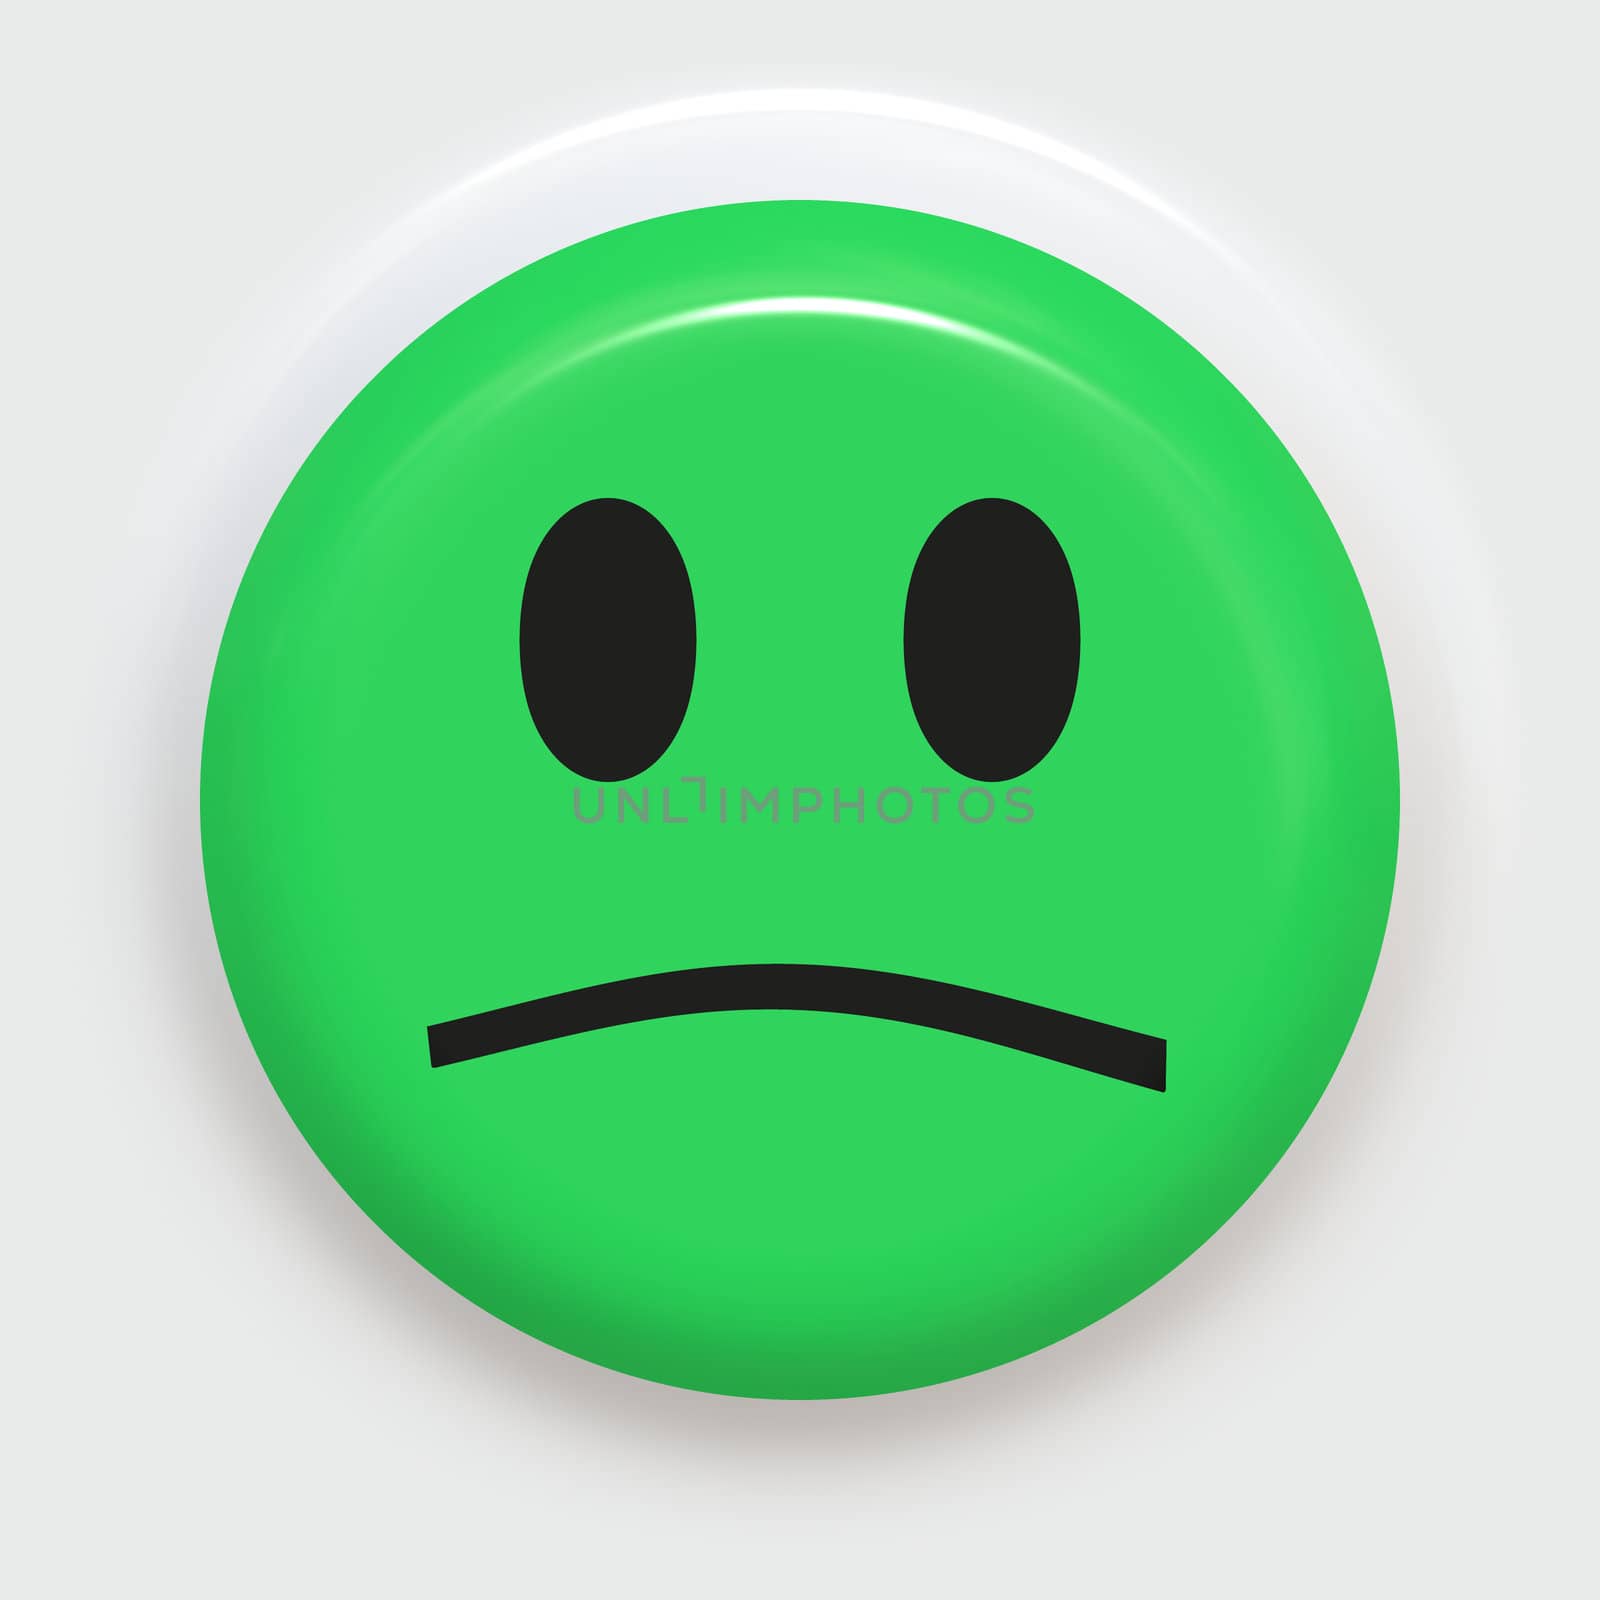 Sad looking green smiley